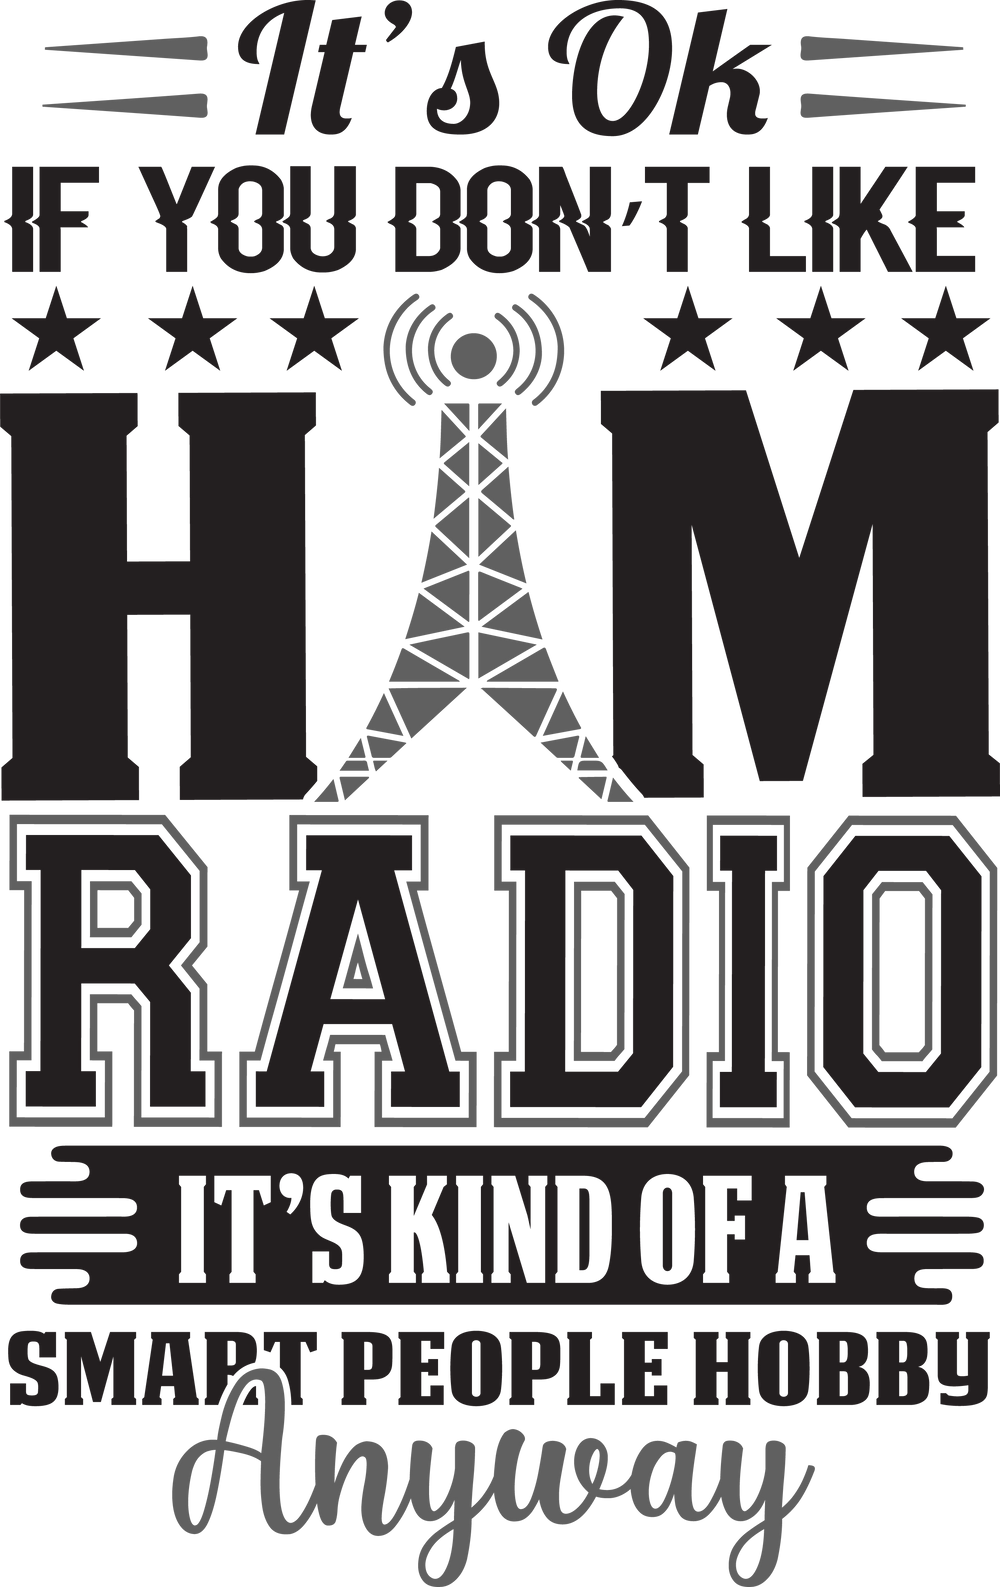 Radio Waves & Raves: Exclusive Ham Radio T-Shirts & More!